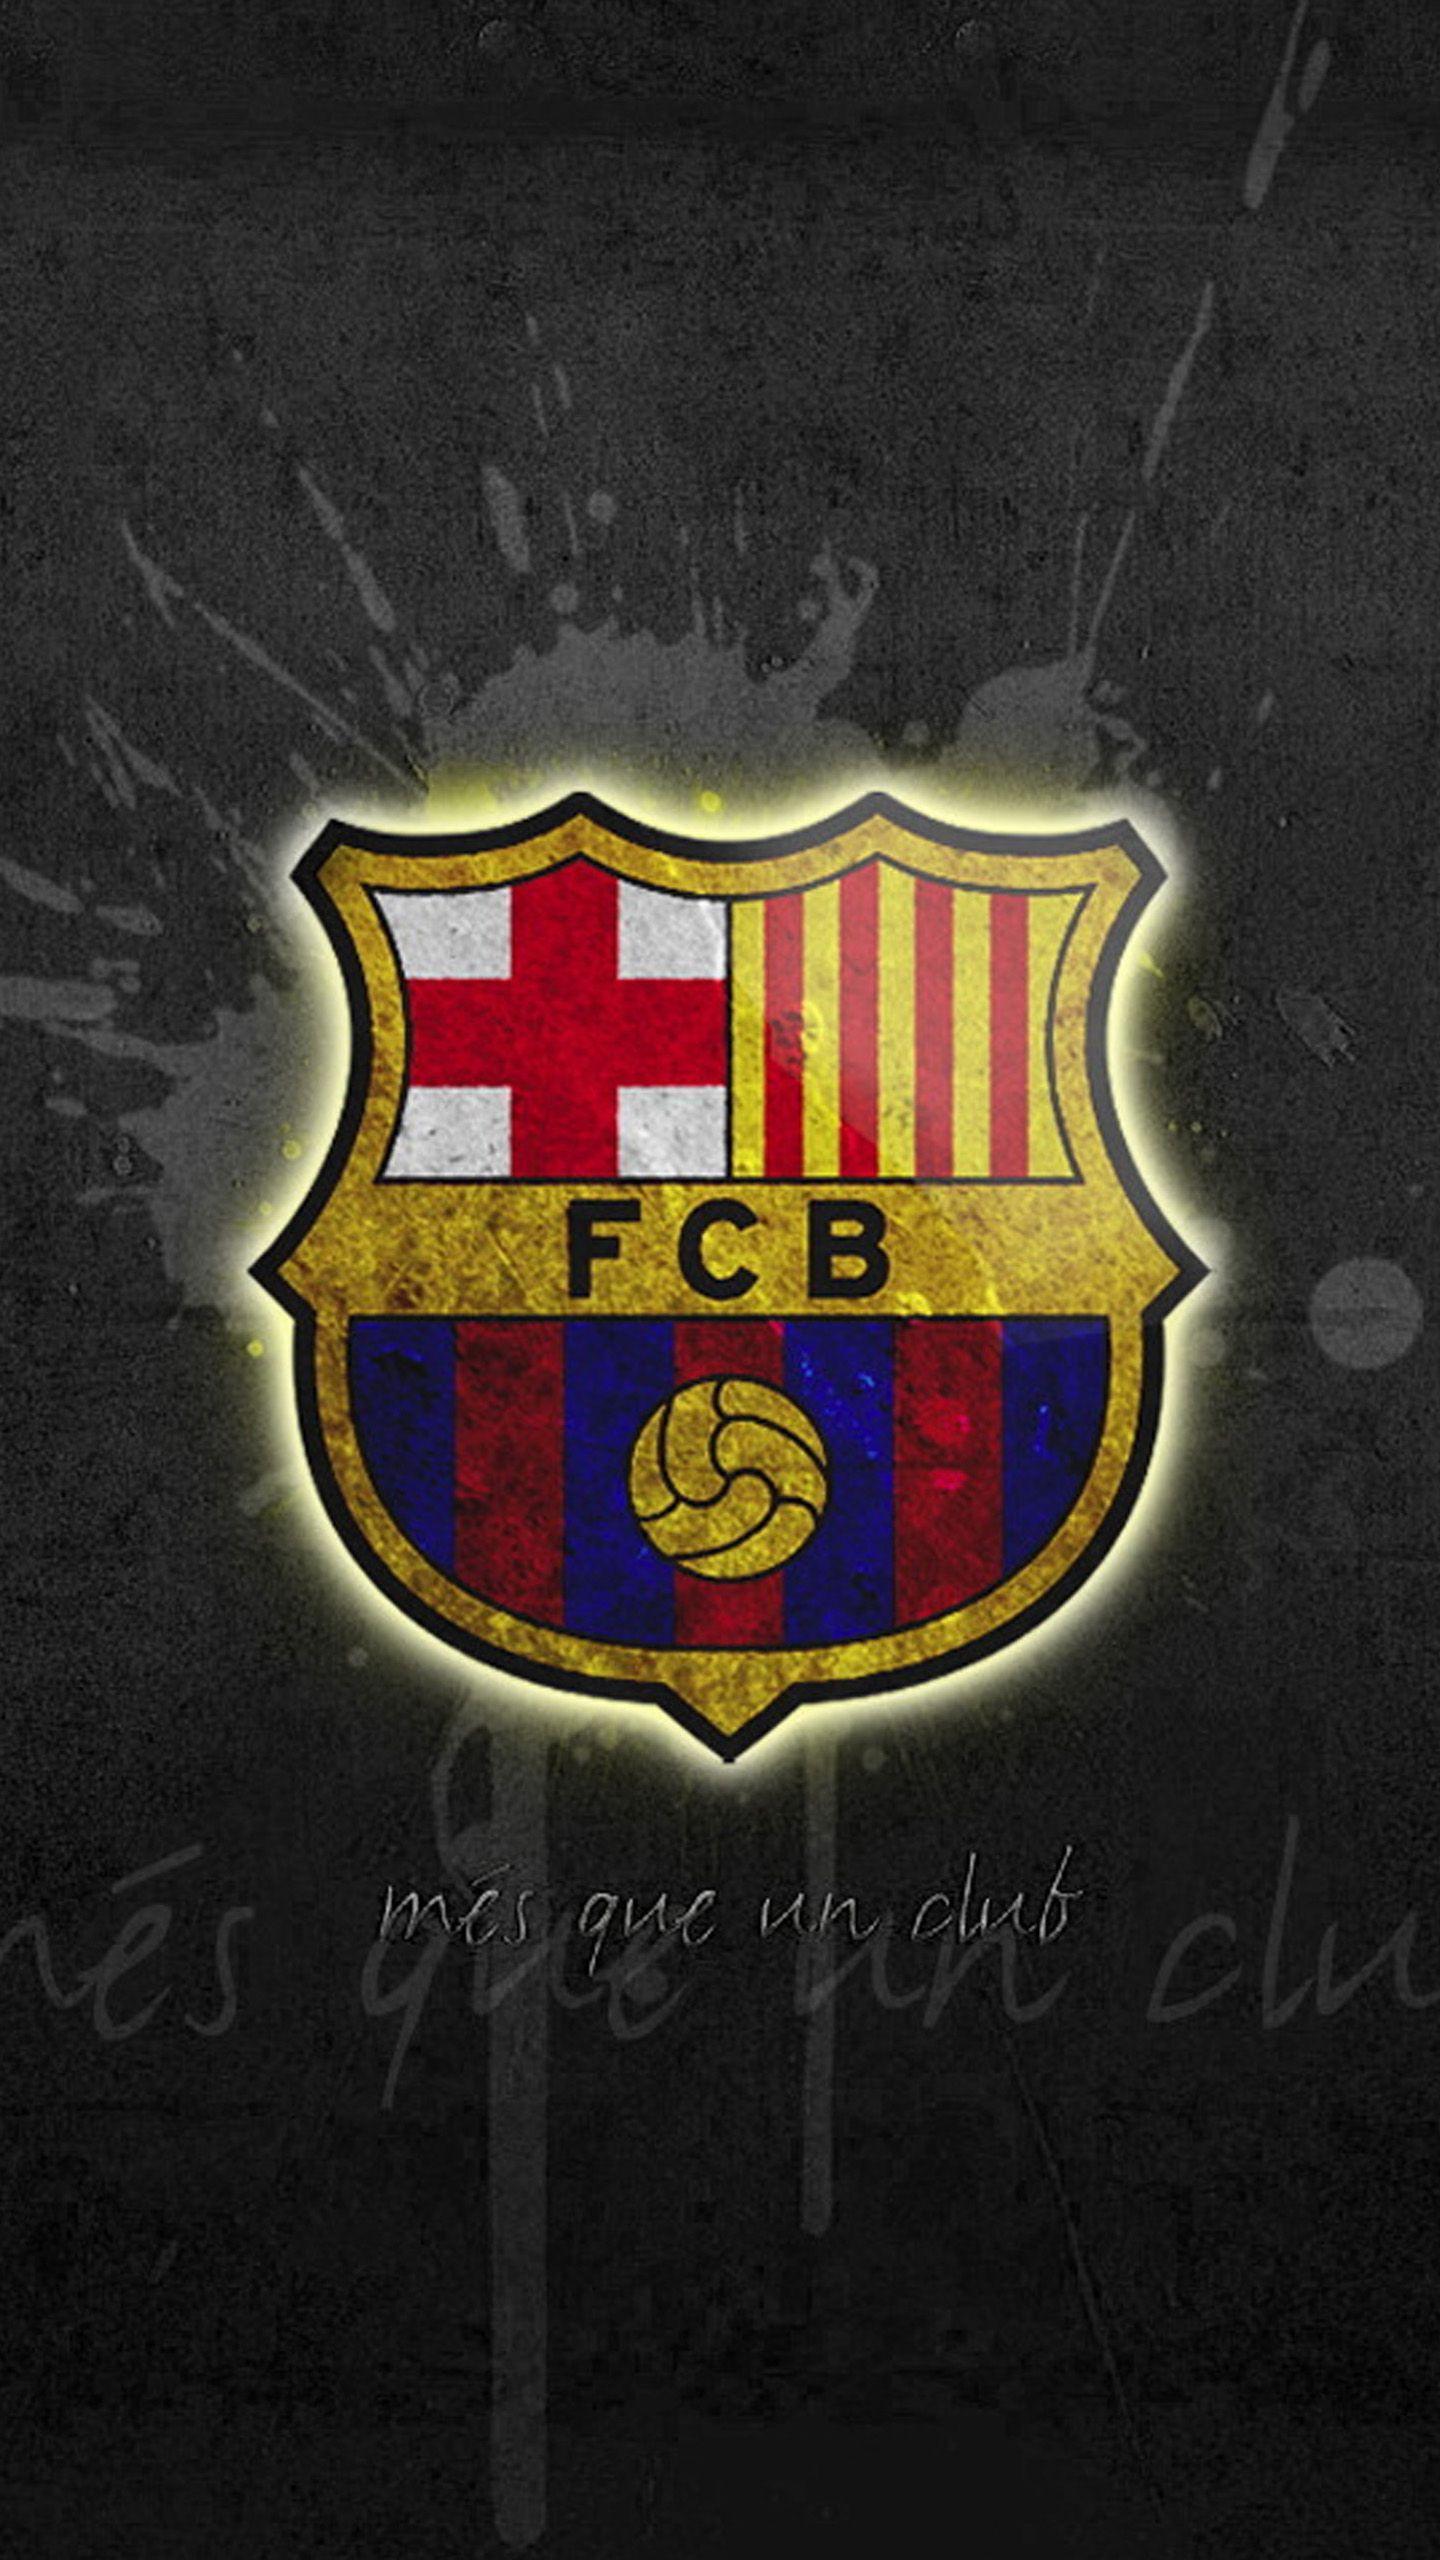 FC Barcelona wallpaper for galaxy